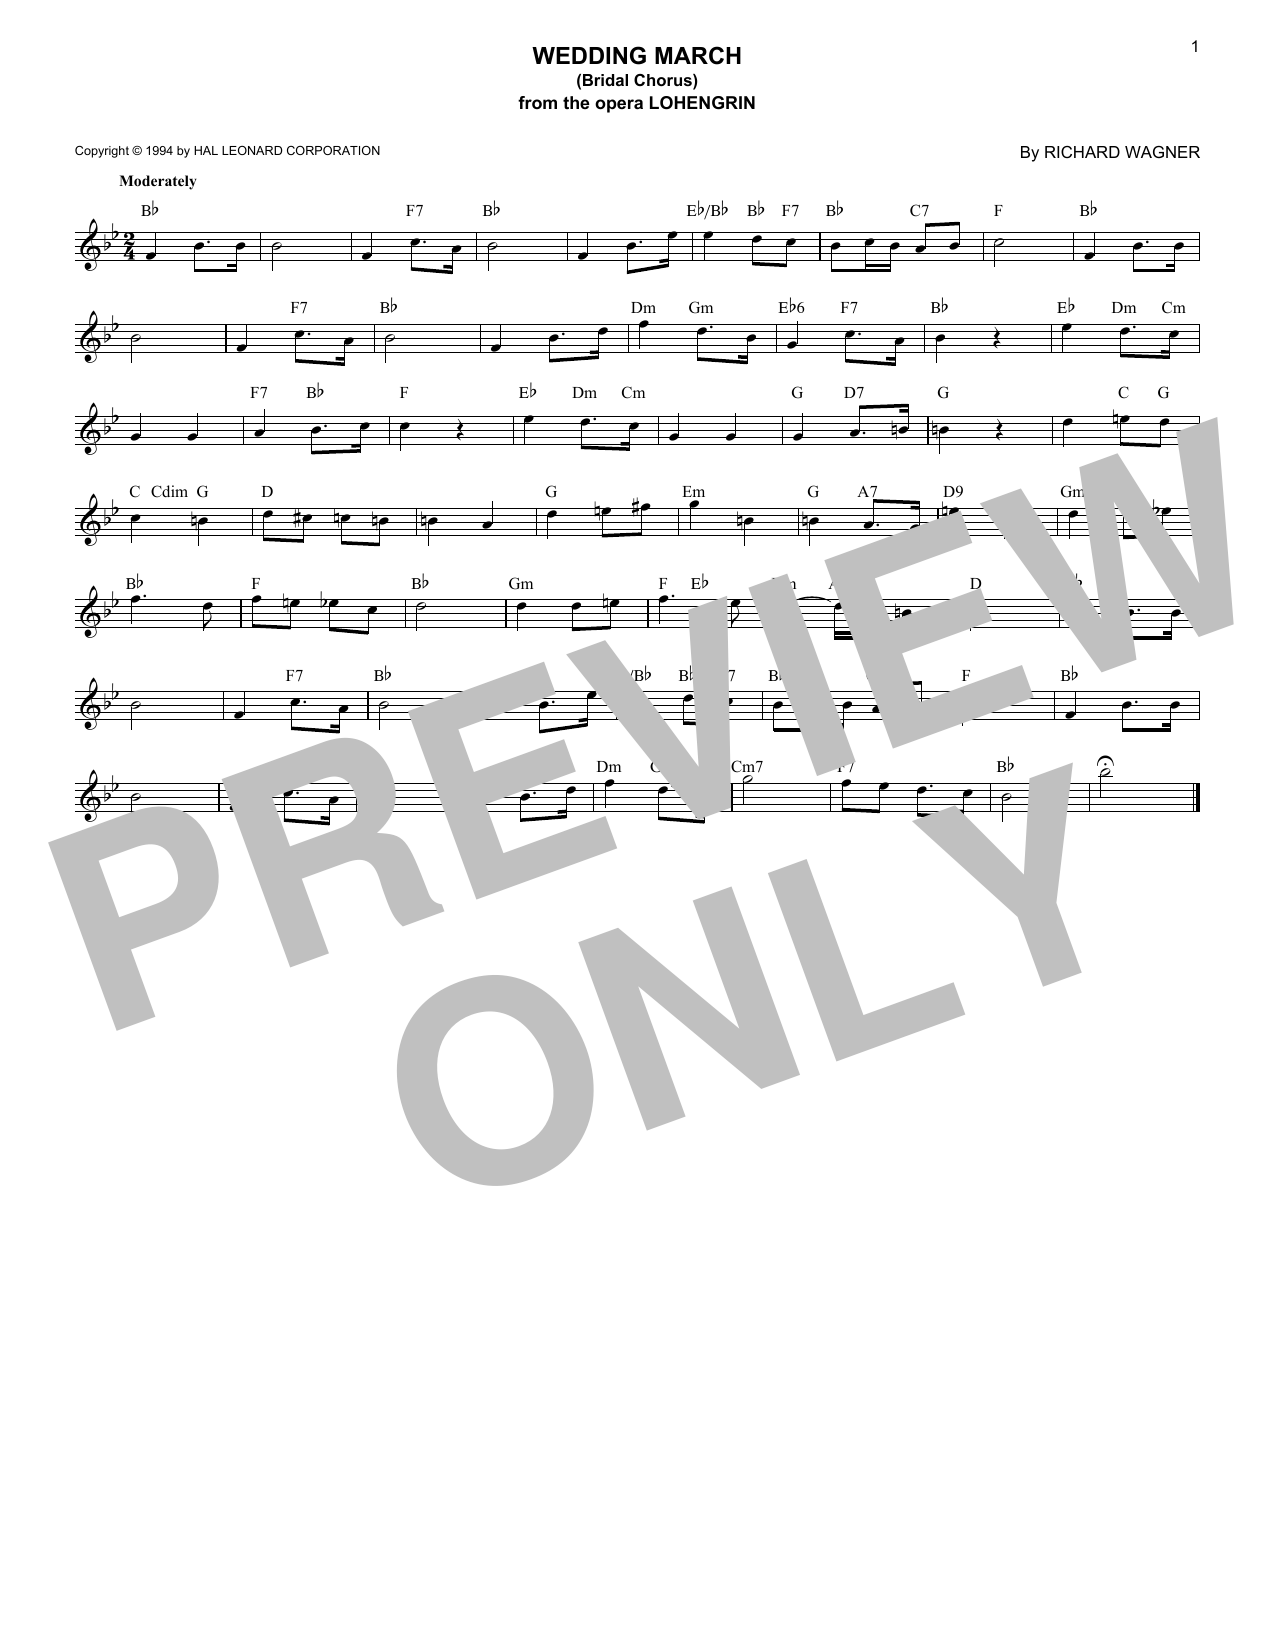 Richard Wagner Wedding March (Bridal Chorus) Sheet Music Notes & Chords for Violin and Piano - Download or Print PDF